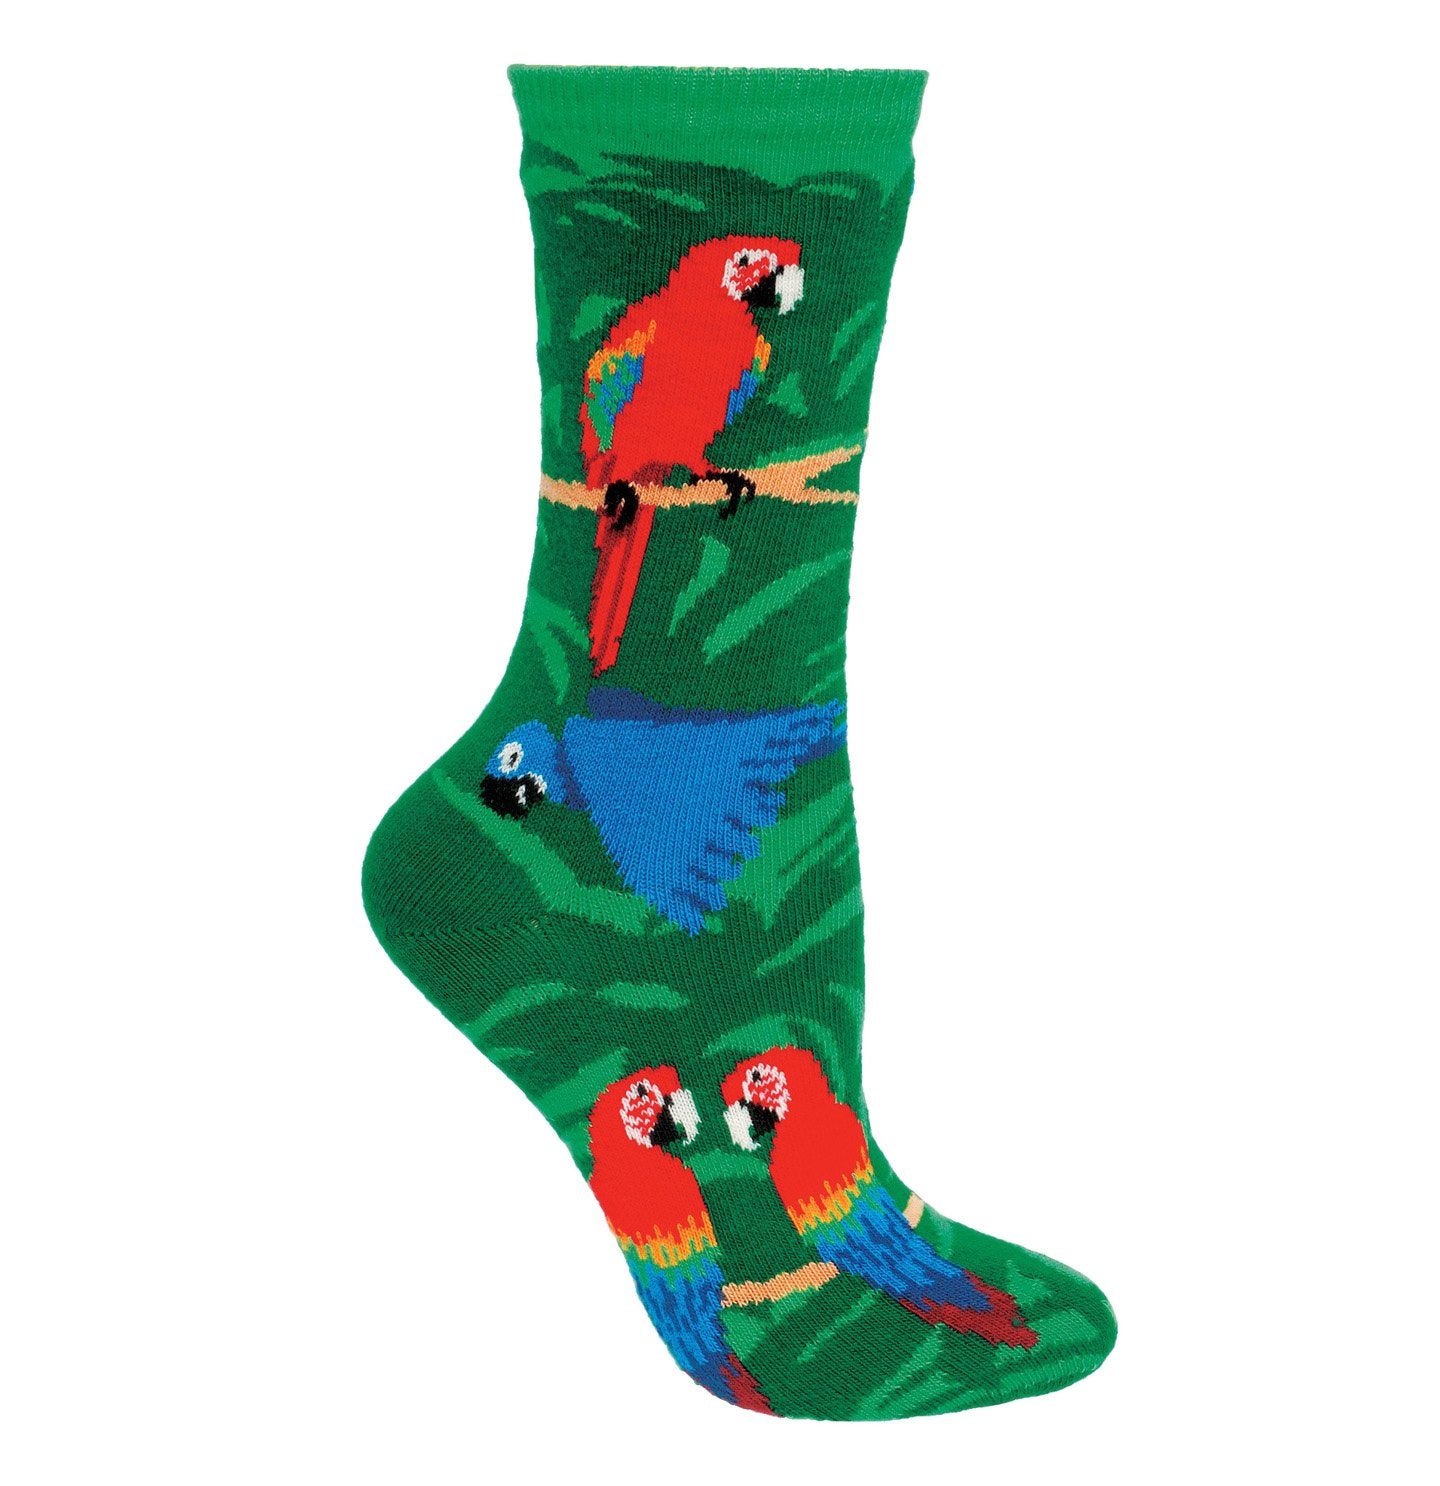 Animal Pride - Parrots on Green - Adult Cotton Crew Socks